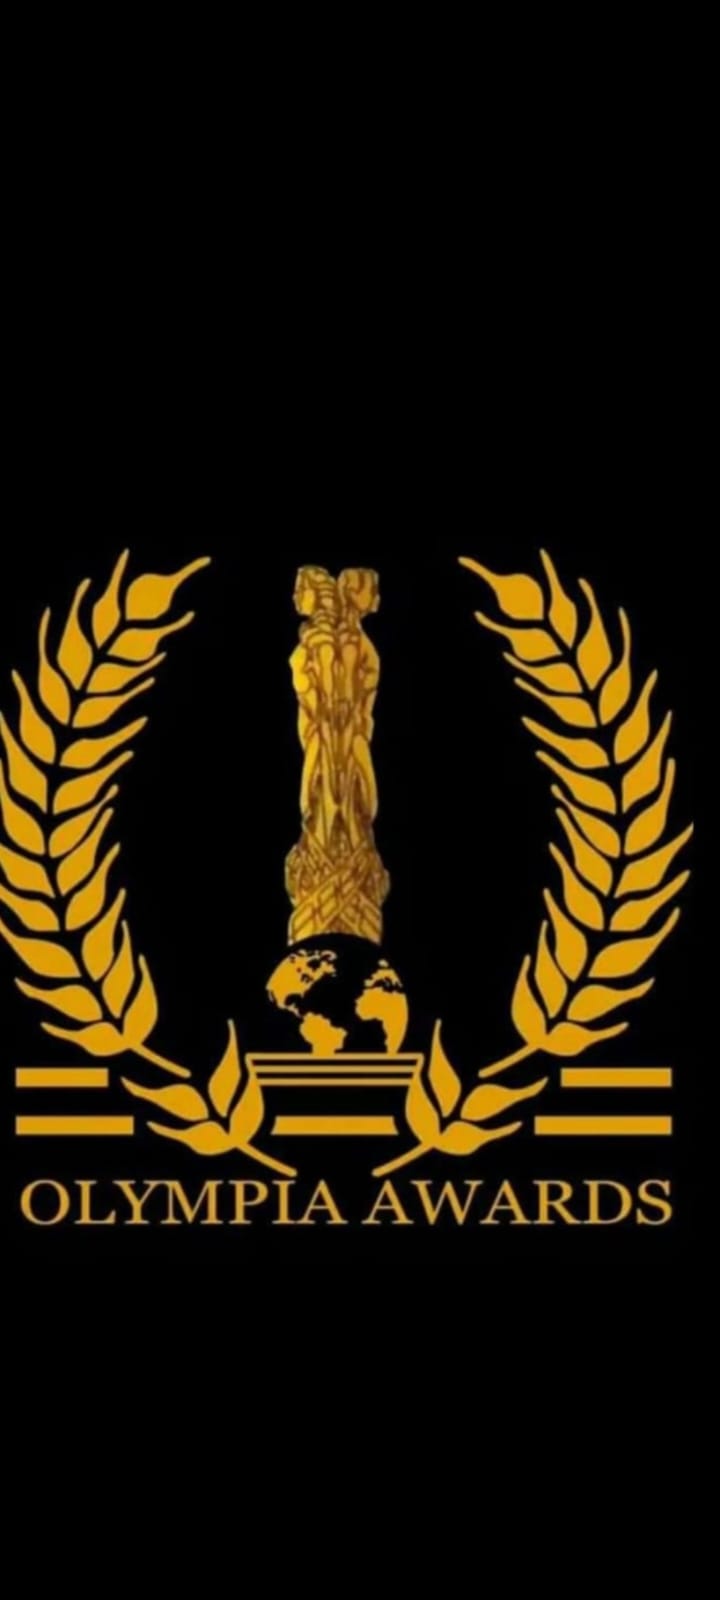 Dr. Prince Olympia Gellini Announces International Trademark Of Olympia Awards 